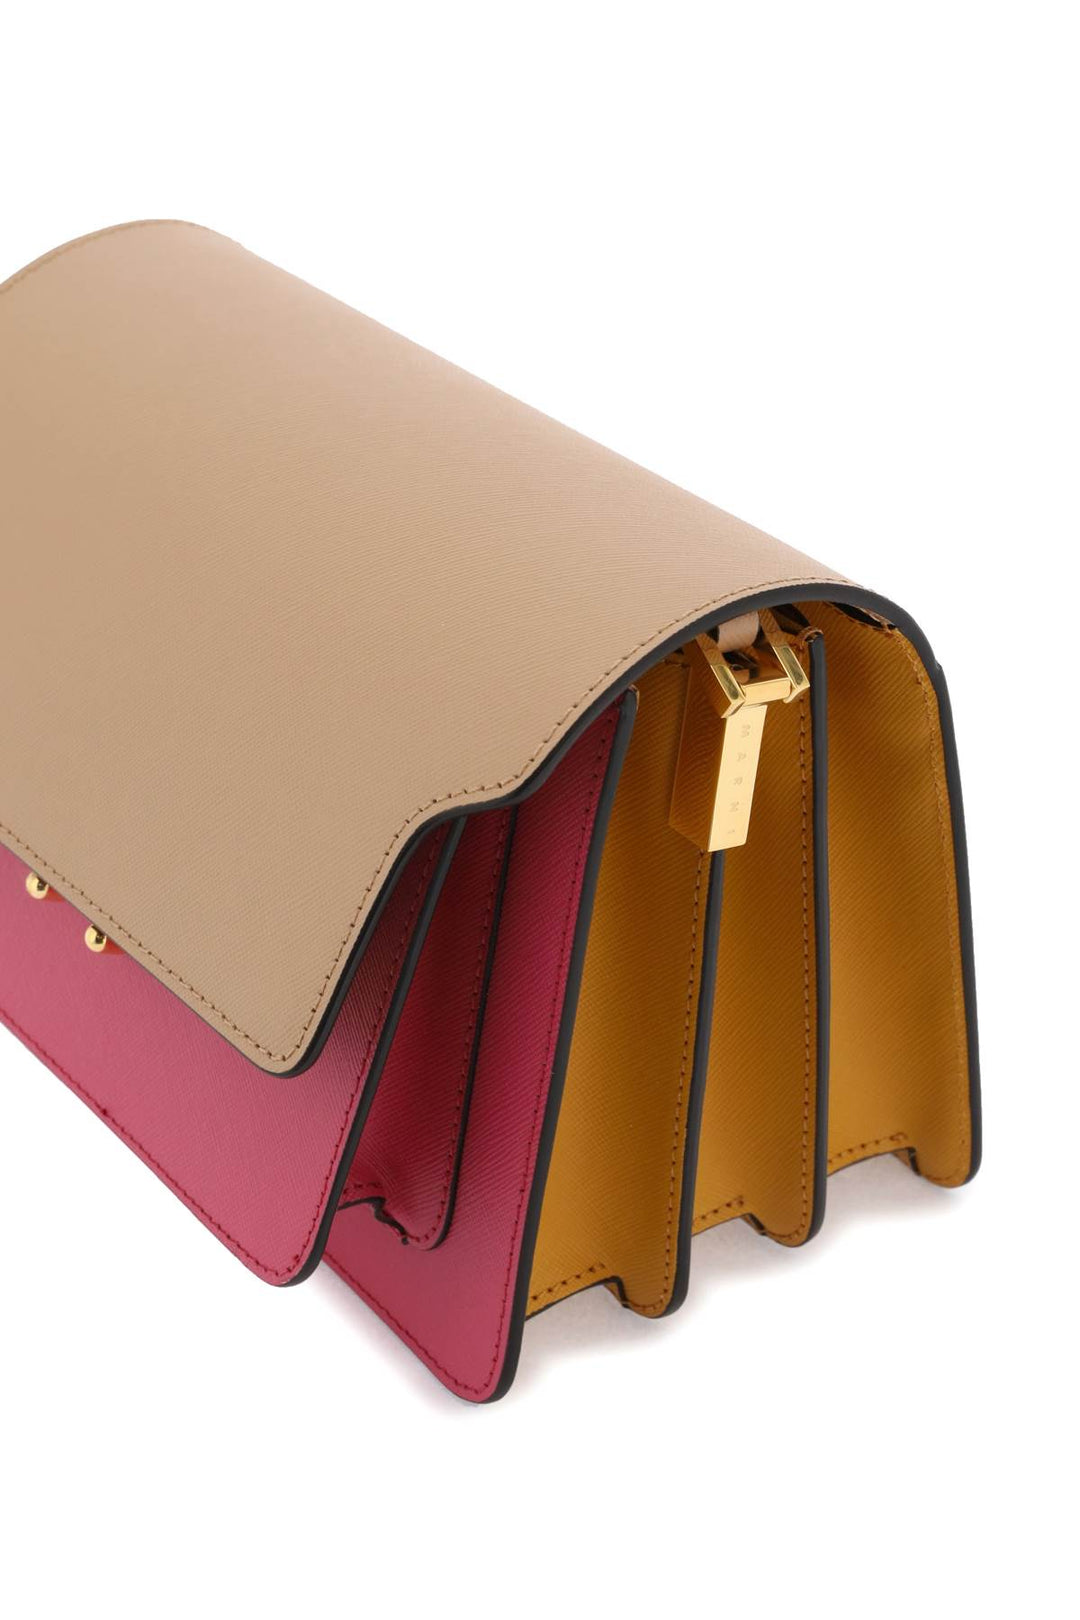 Marni Tricolor Leather Medium Trunk Bag   Beige